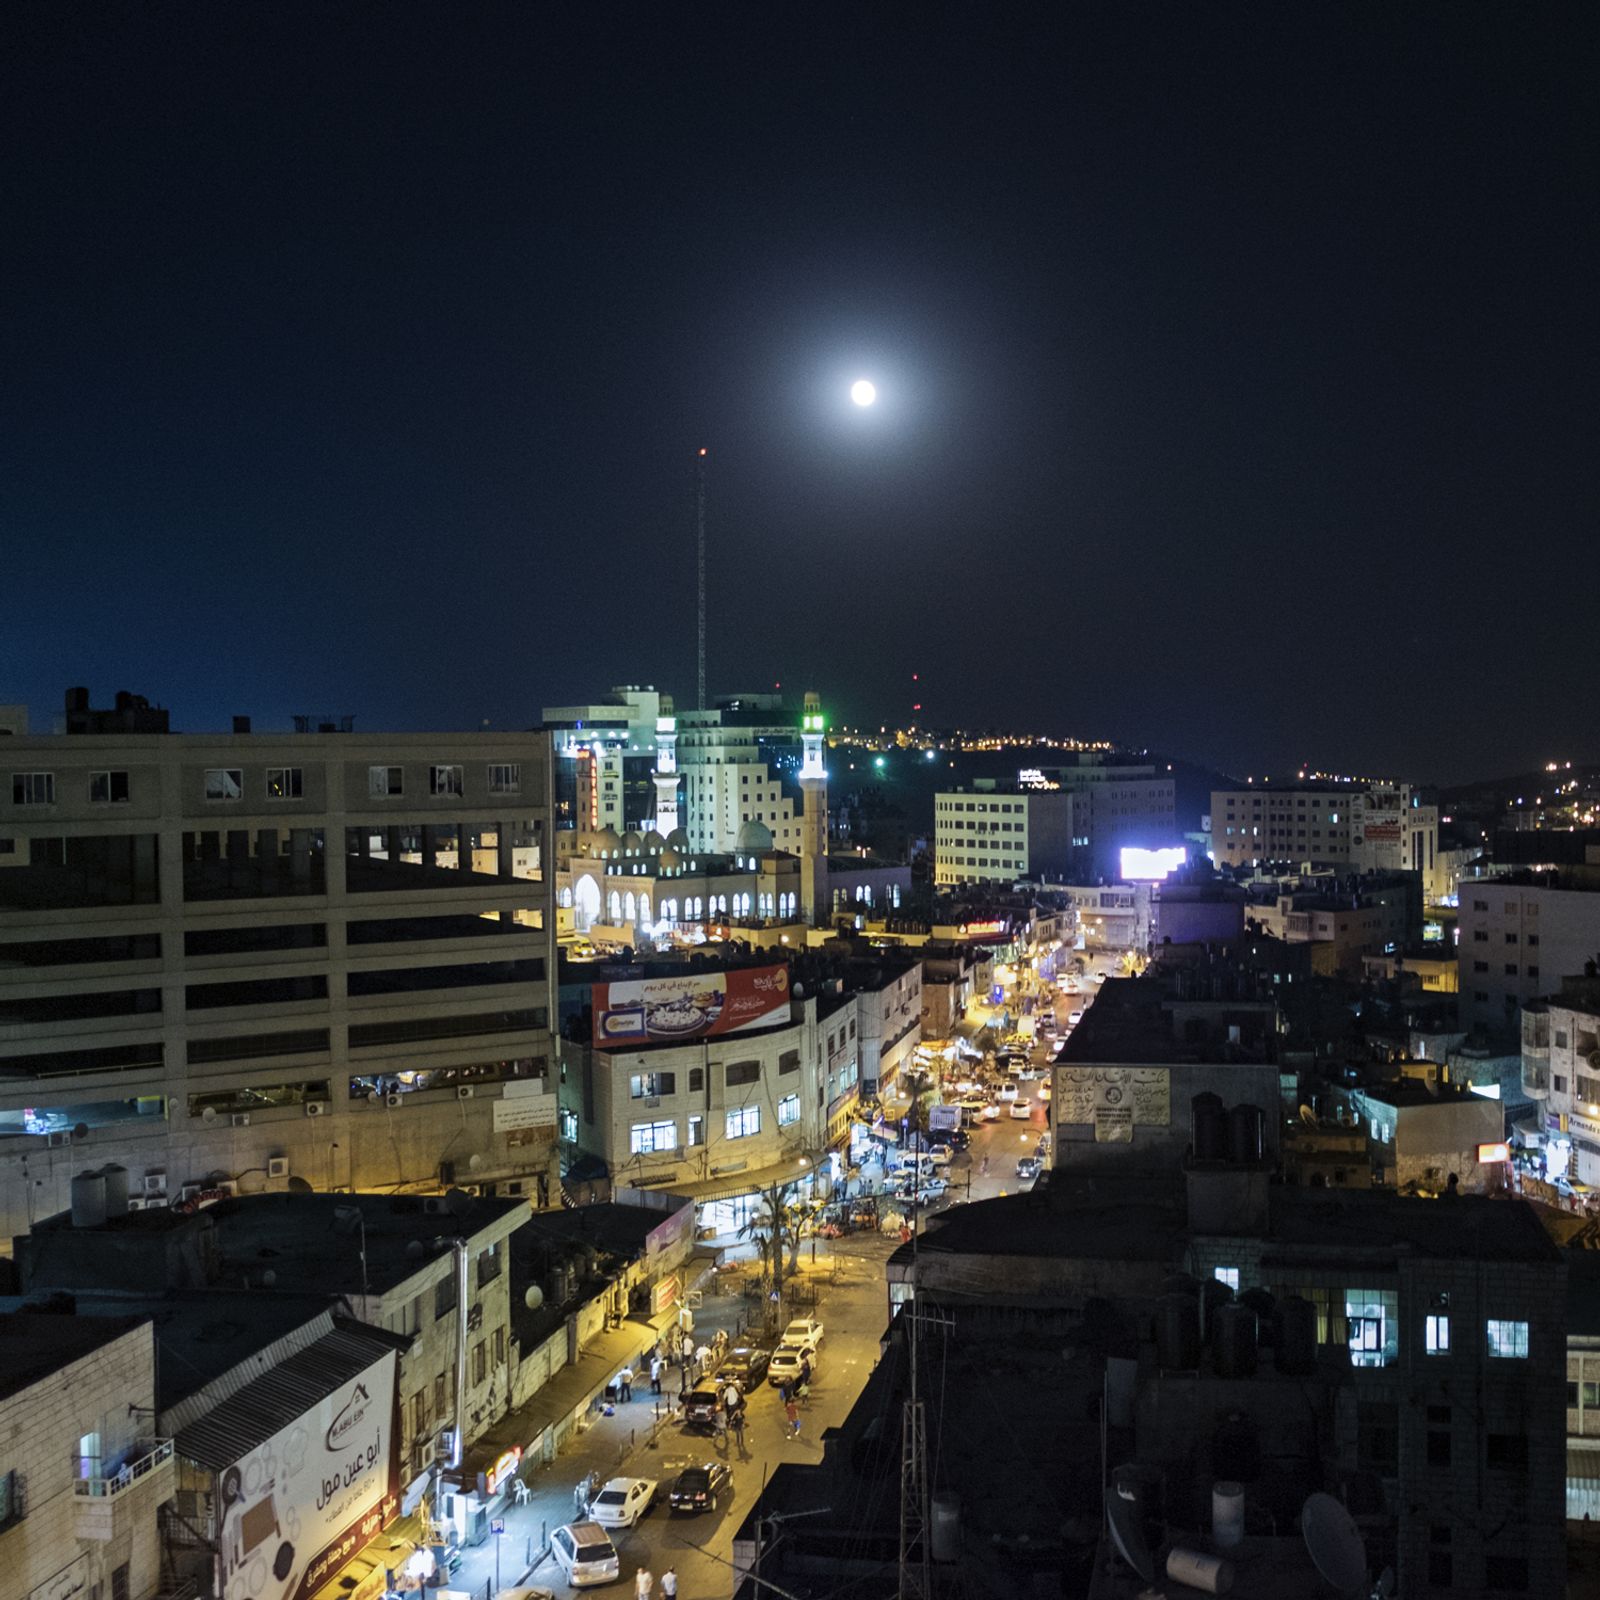 © Antonio Faccilongo - Ramallah, Palestine. A night view of Ramallah city center.